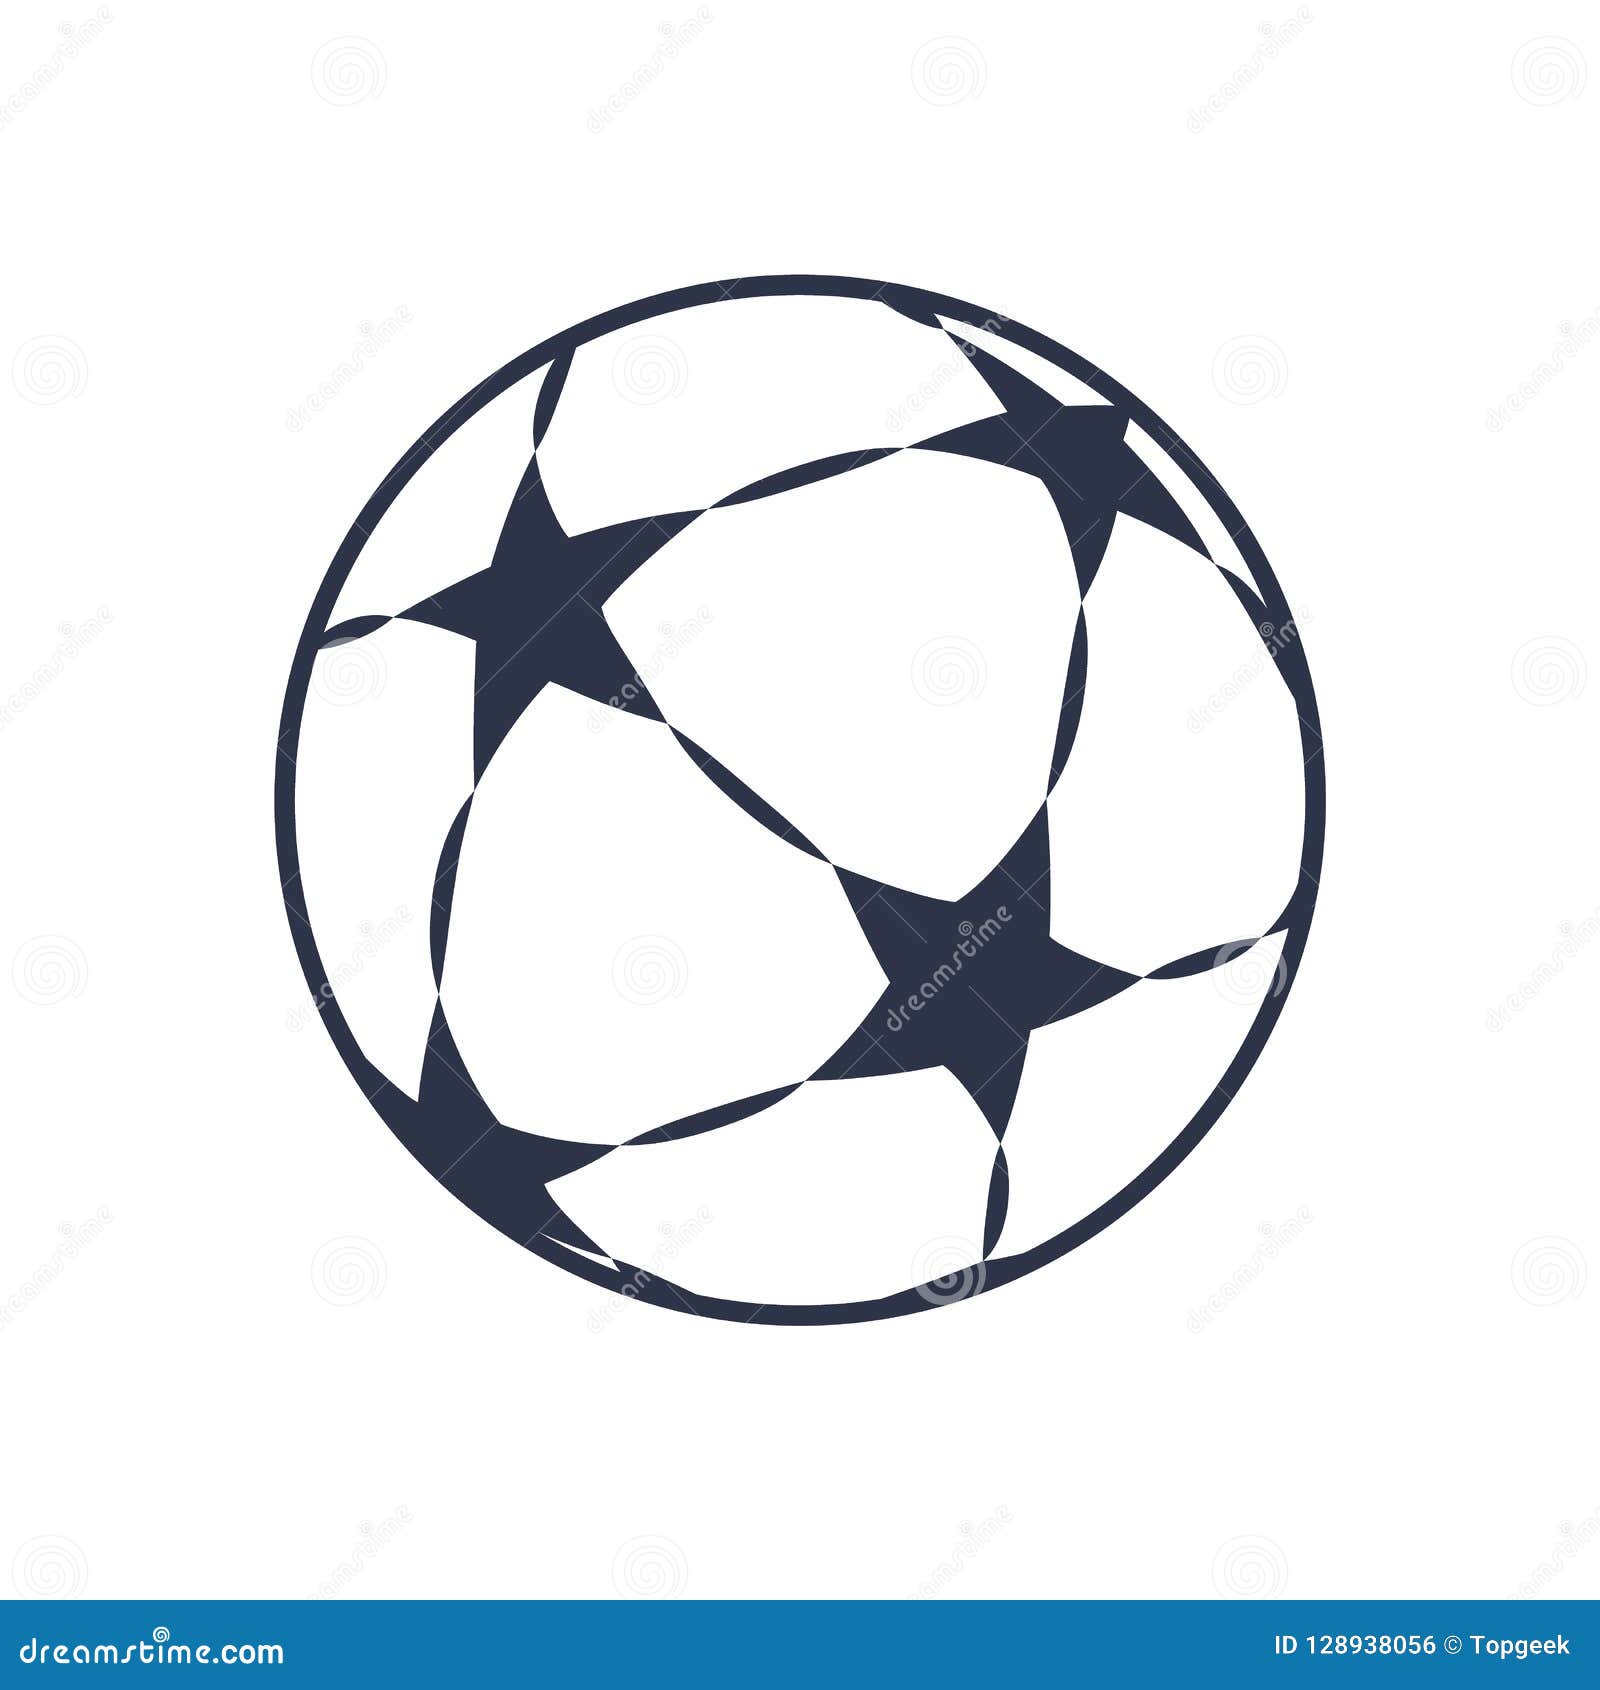 Round Ball To Play Football Vector Illustration Stock Vector ...